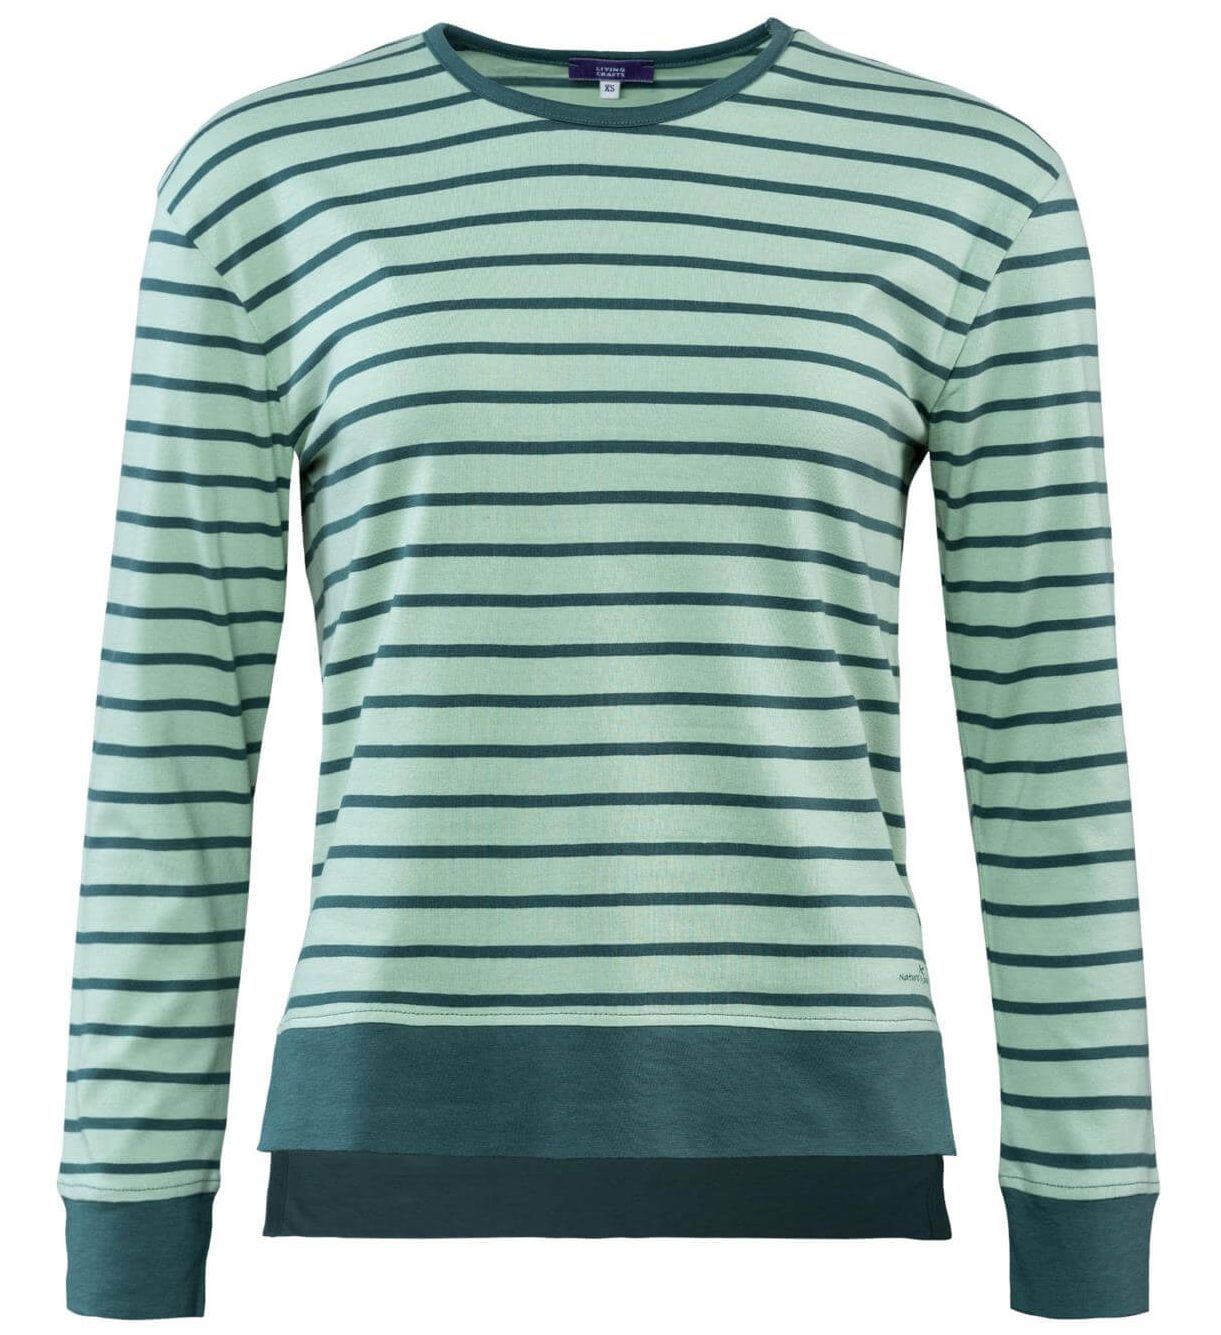 Schlaf-Shirt NICCI misty green/stripe